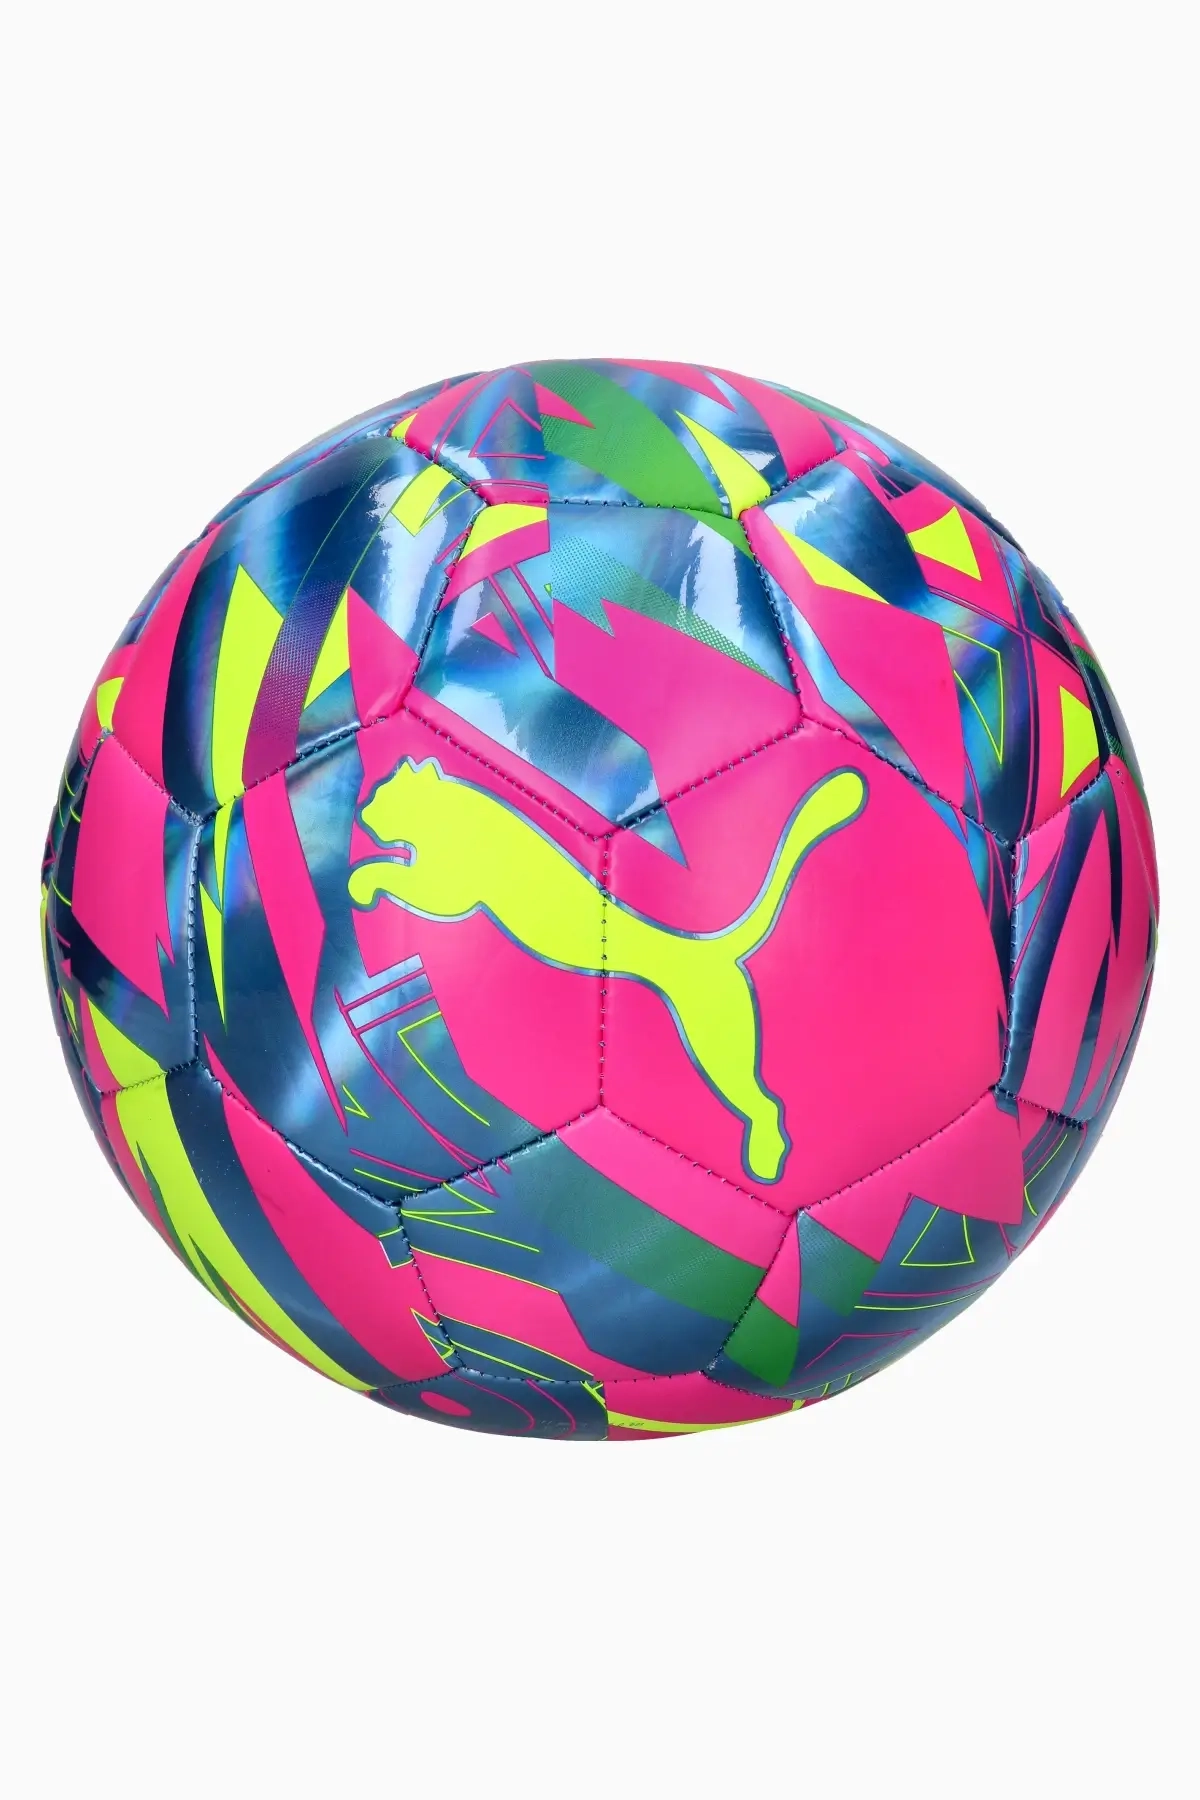 Ball Puma Graphic Energy size 5 | R-GOL.com - Football boots & equipment